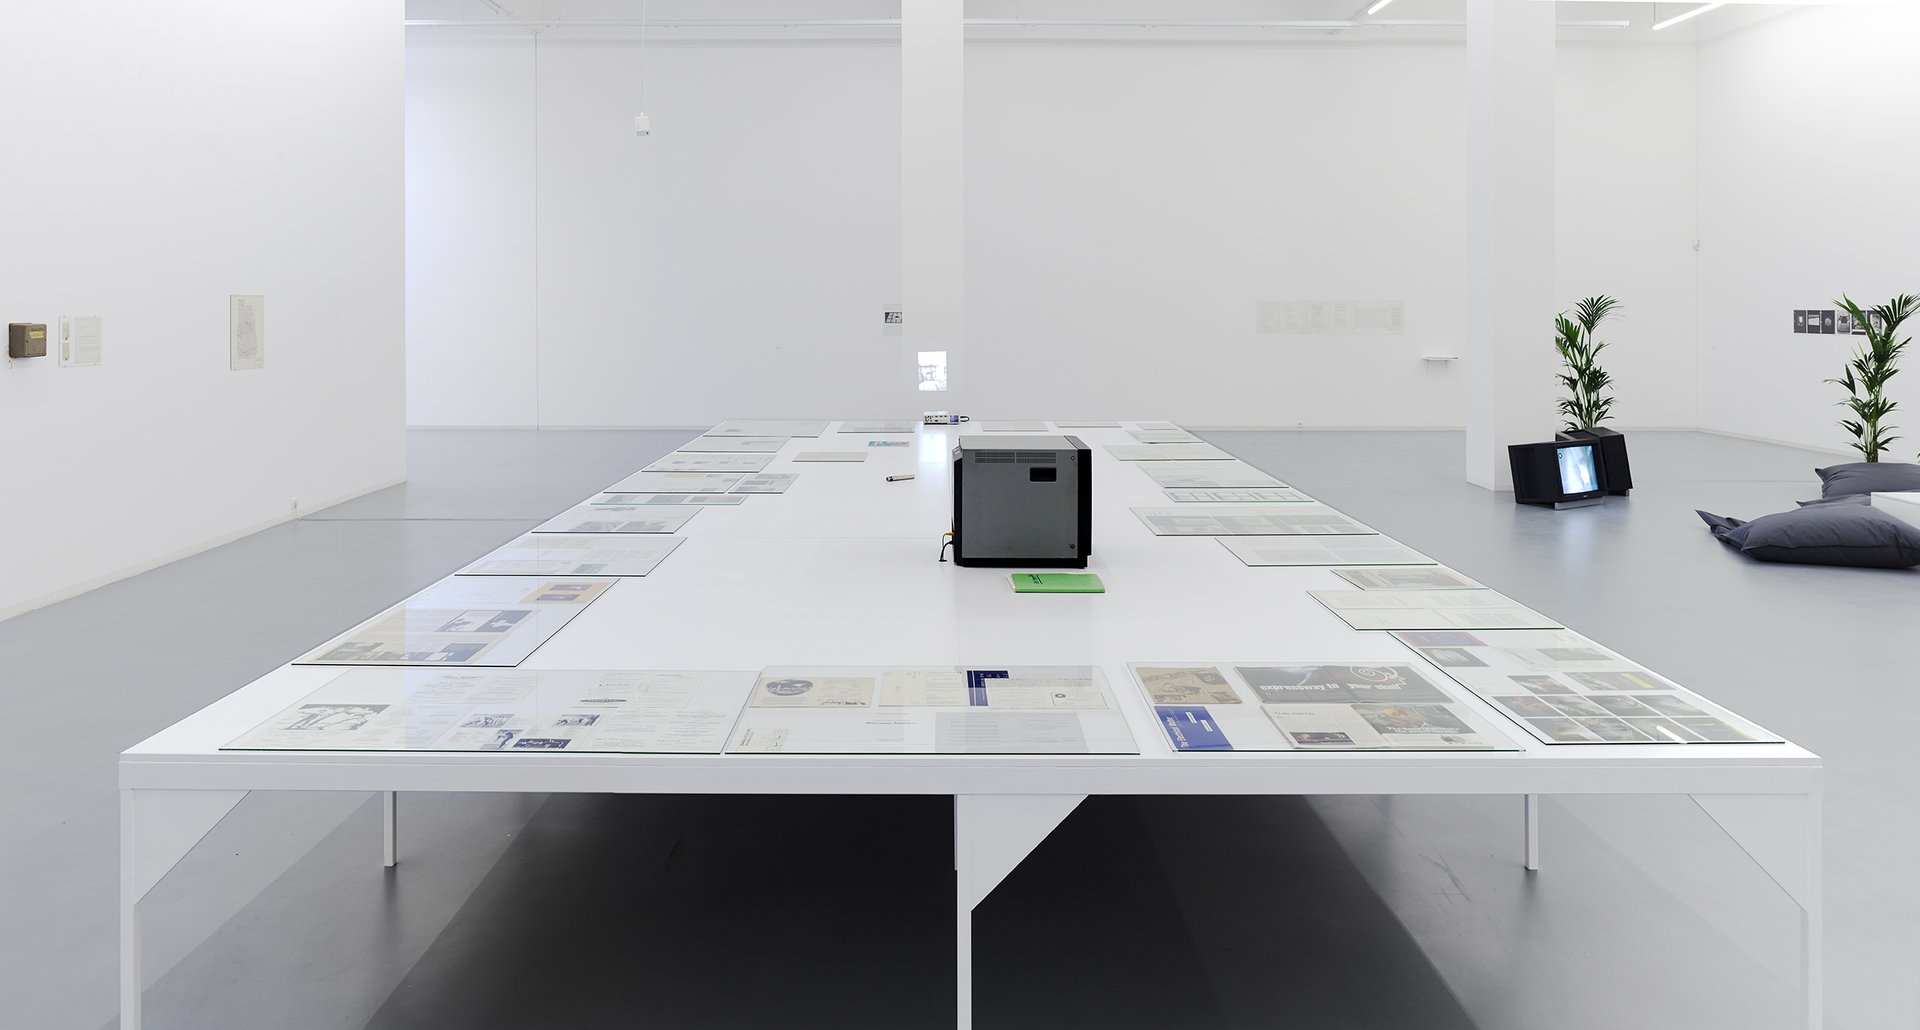 Maryanne Amacher, Intelligent Life, installation view, 2014, Bonner Kunstverein. Courtesy the artist. Photo: Simon Vogel